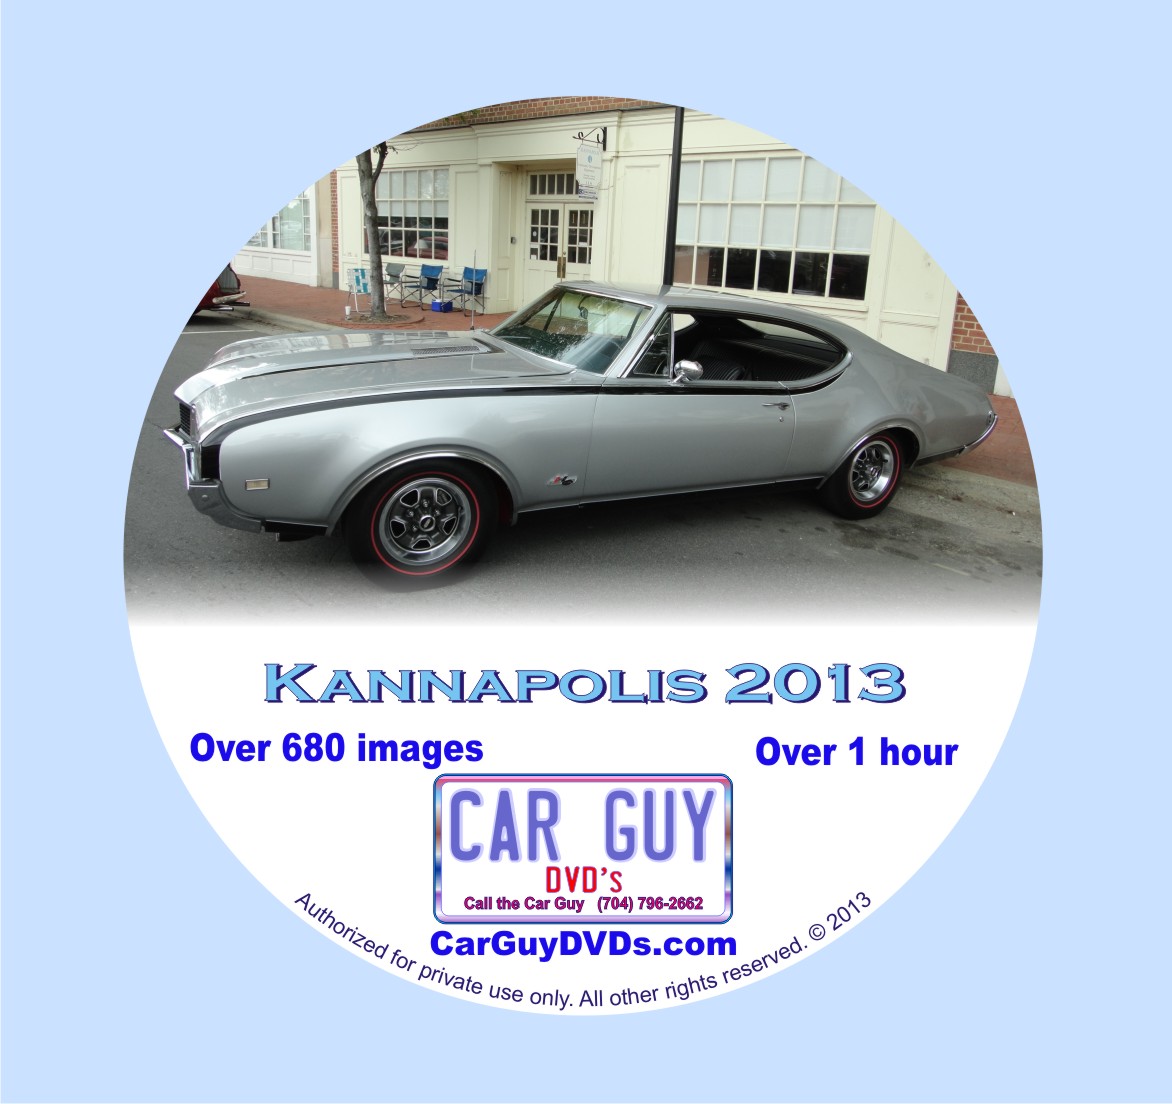 Kannapolis Cruise and Car Show 2013